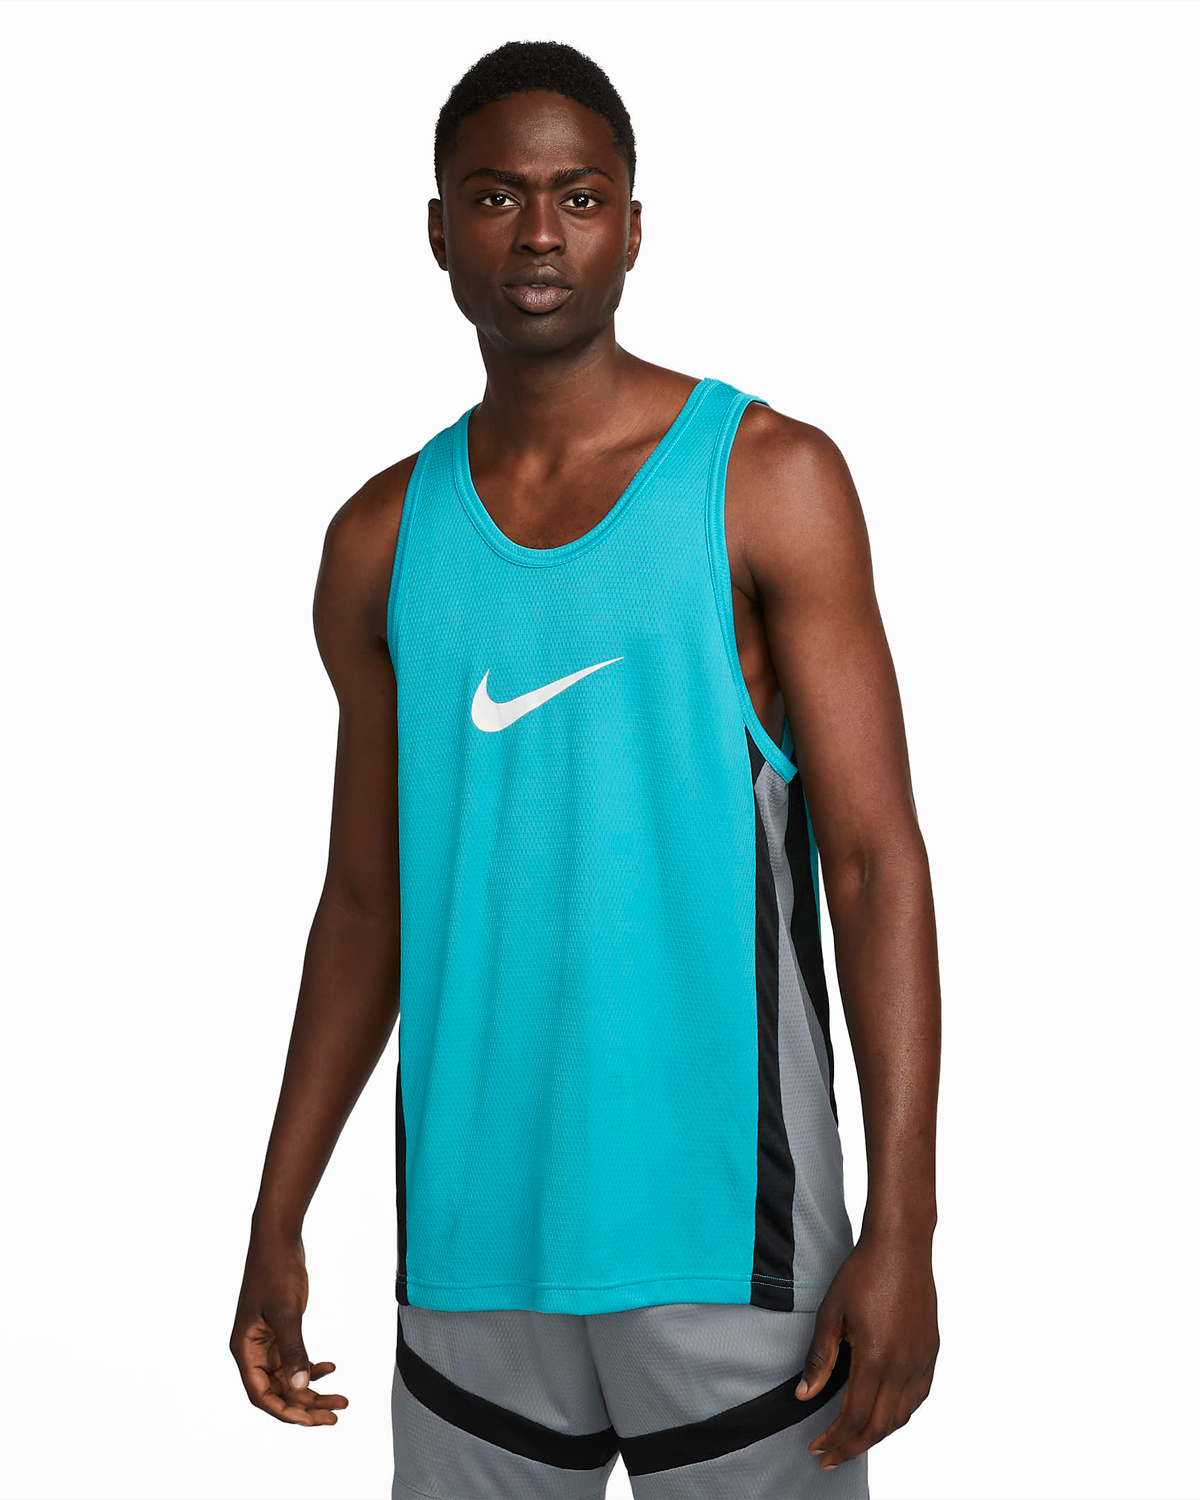 Nike-Icon-Basketball-Jersey-Teal-Nebula